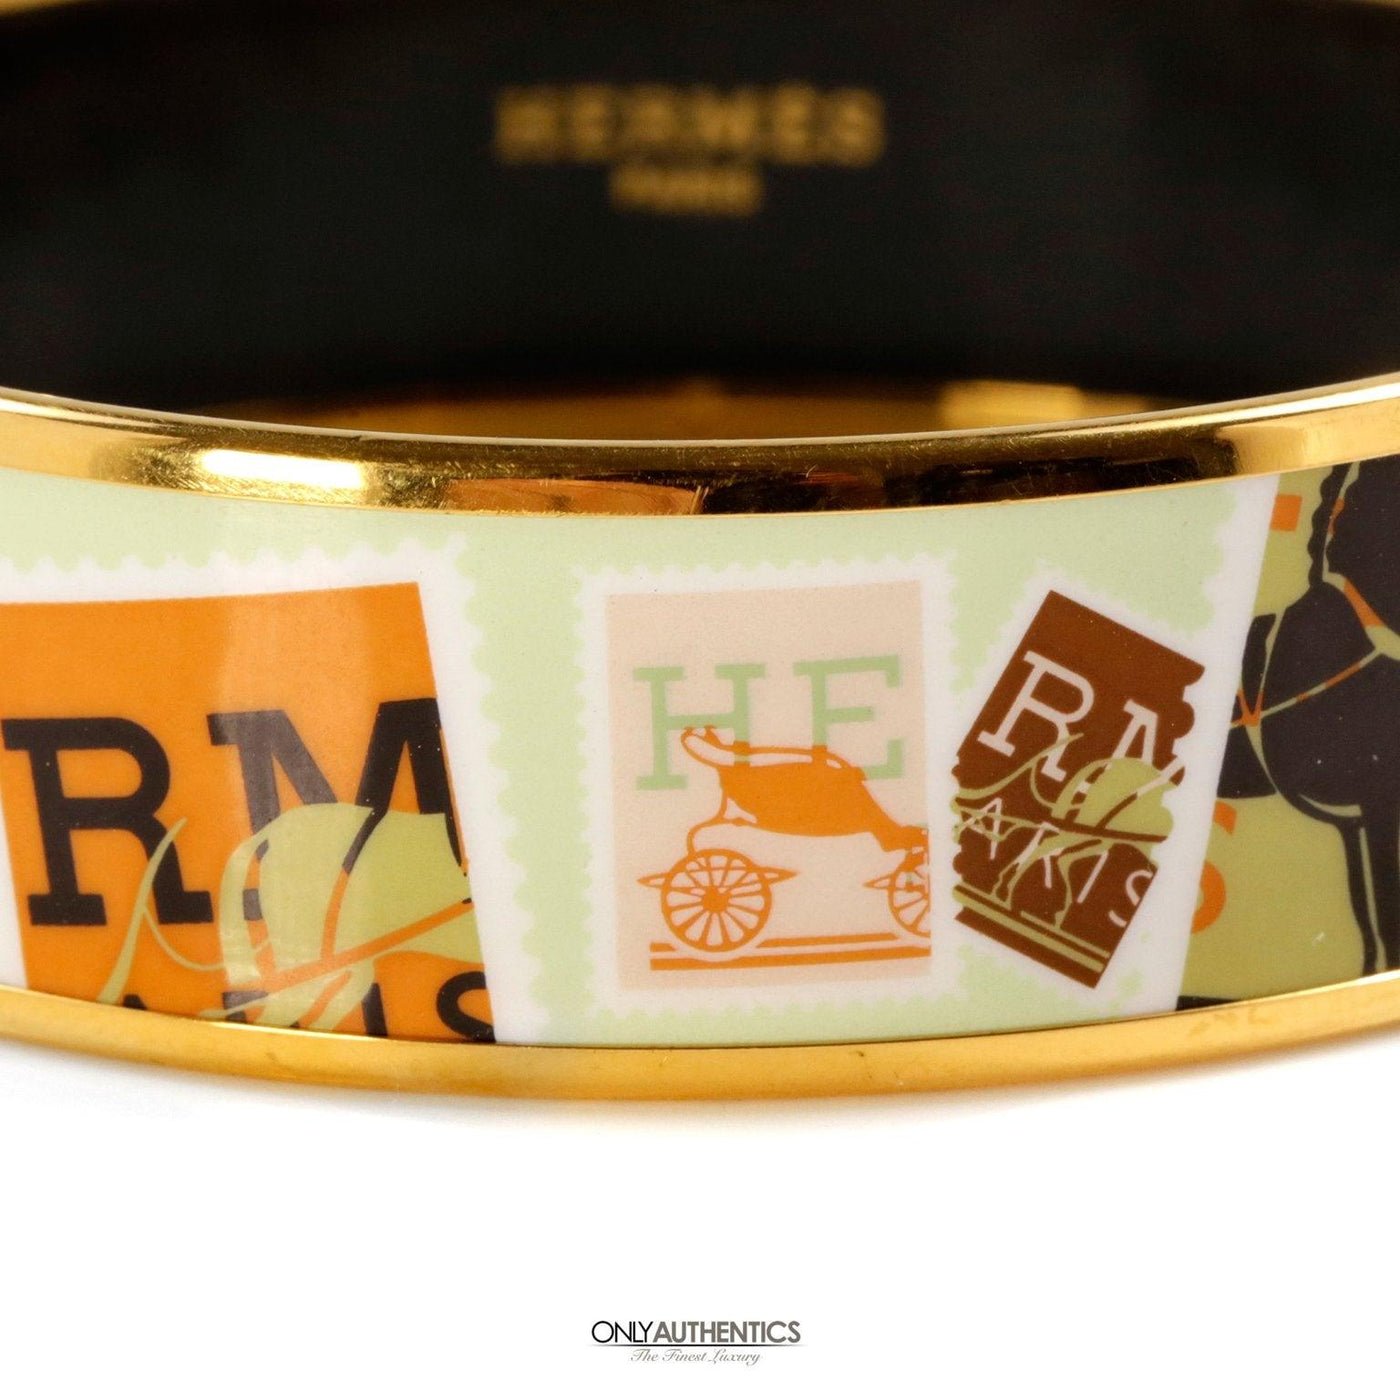 Hermès Postage Stamps Enamel Bracelet - Only Authentics